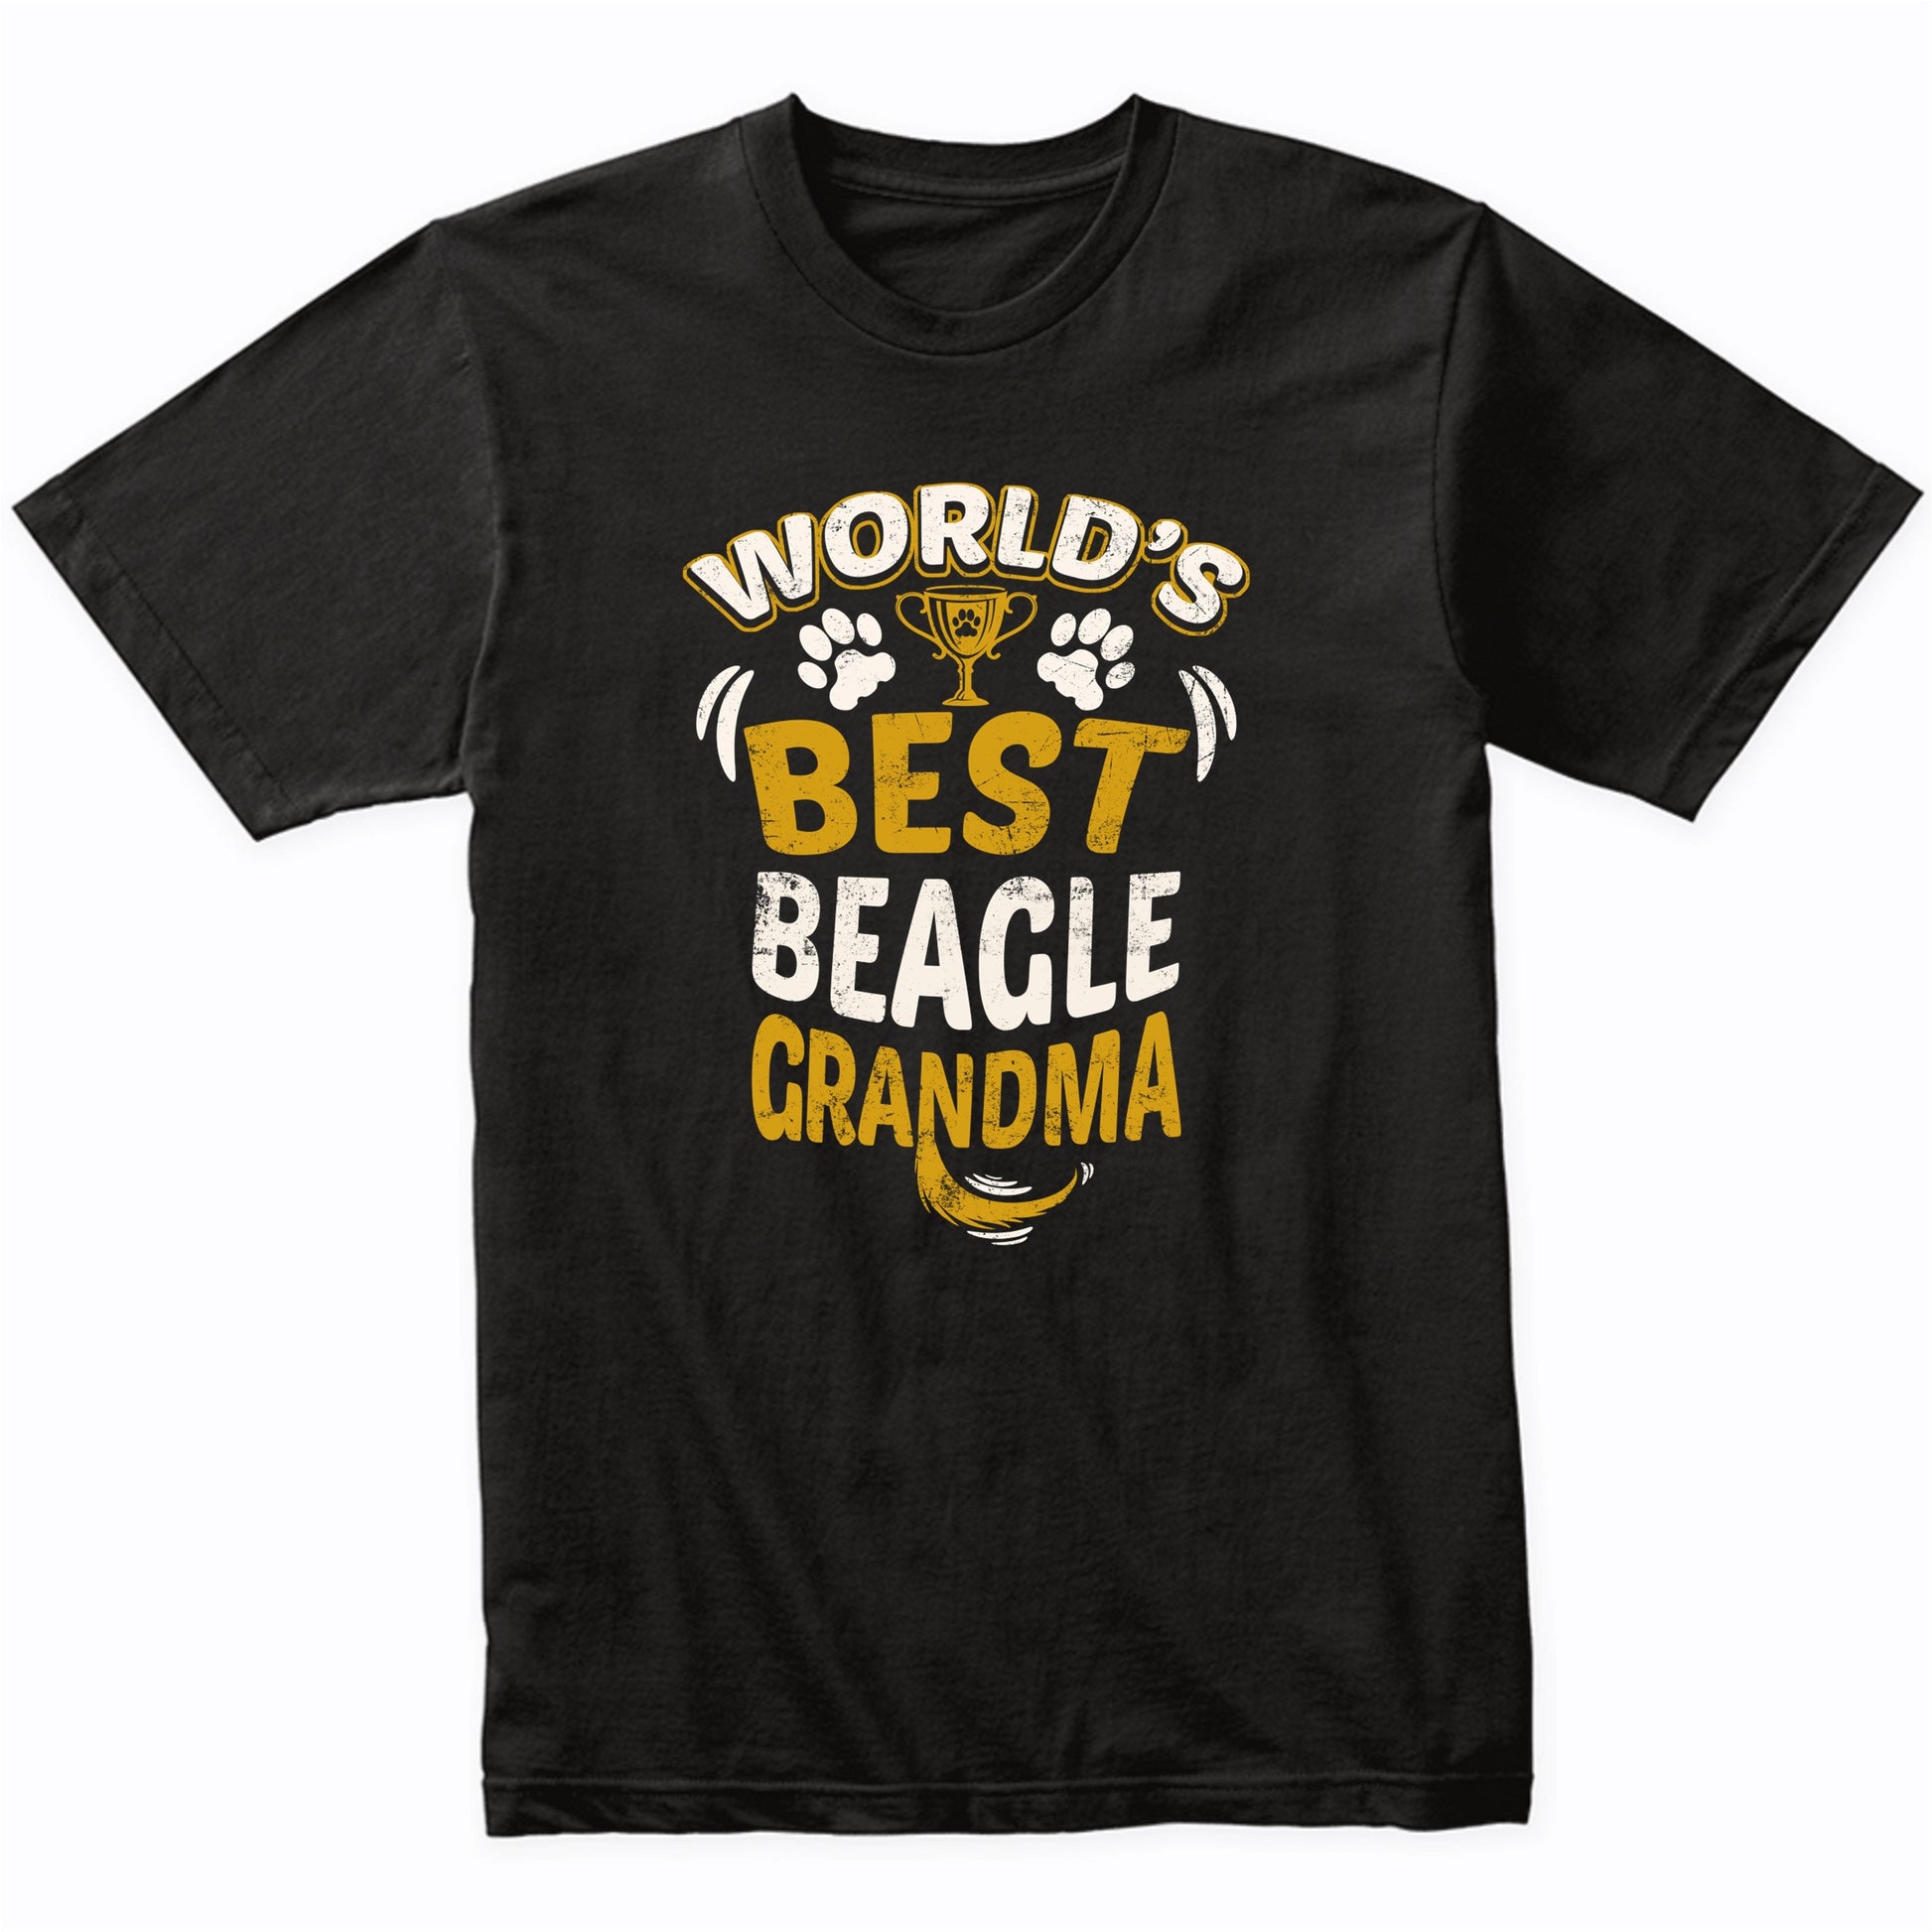 World's Best Beagle Grandma Graphic T-Shirt